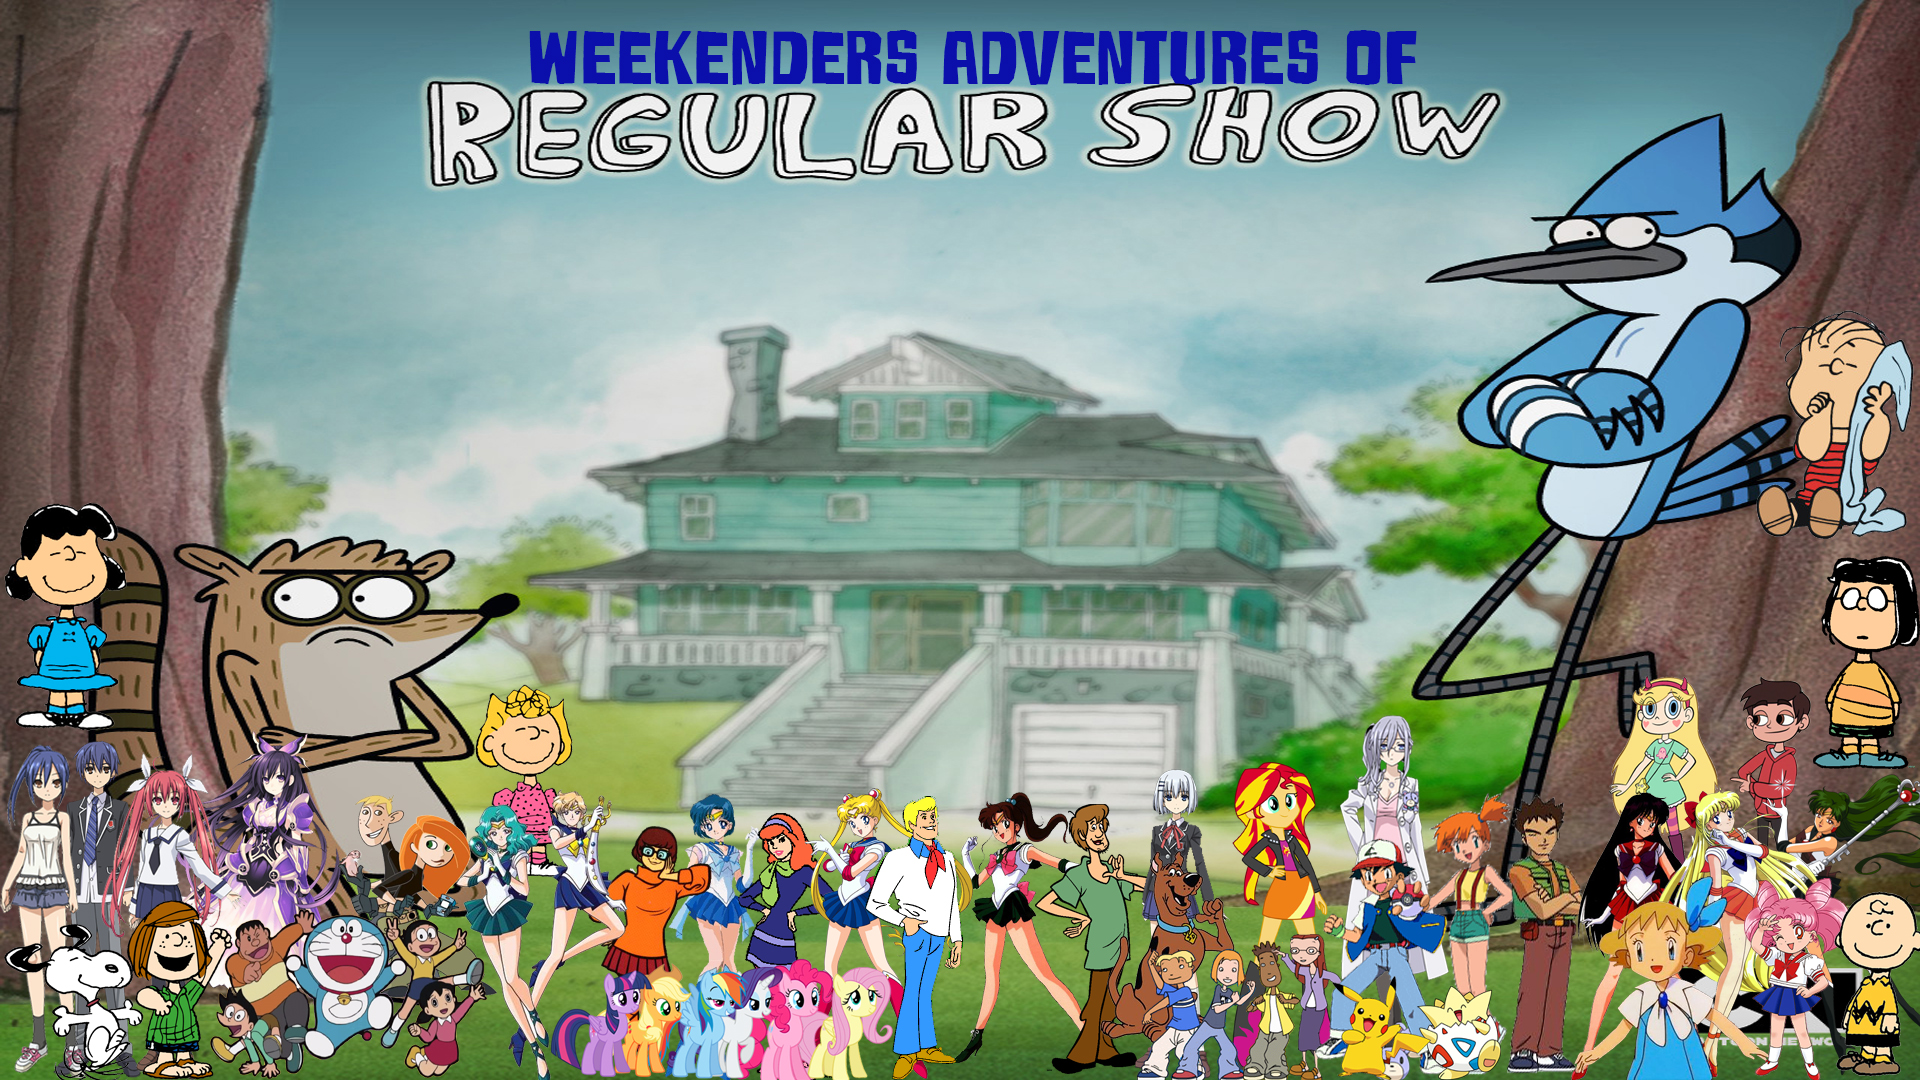 Tino S Adventures Of Regular Show Pooh S Adventures Wiki Fandom